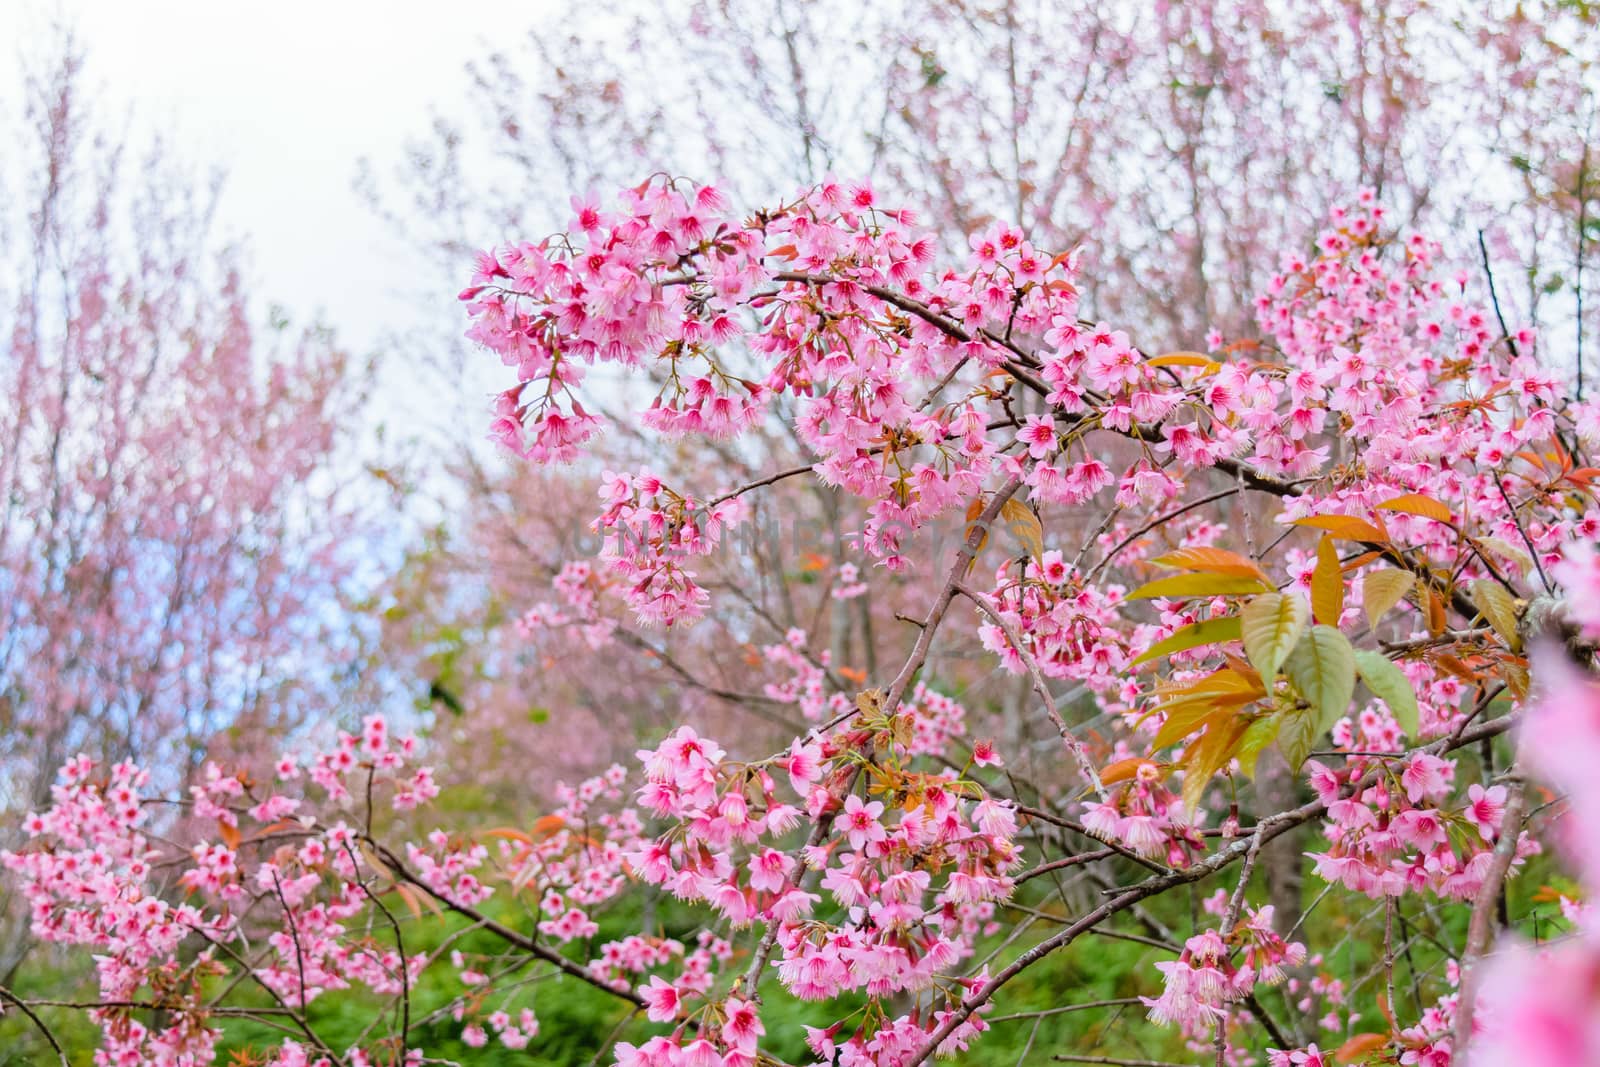 Sakura flowers blooming blossom in PhuLomLo Loei Province , Thailand